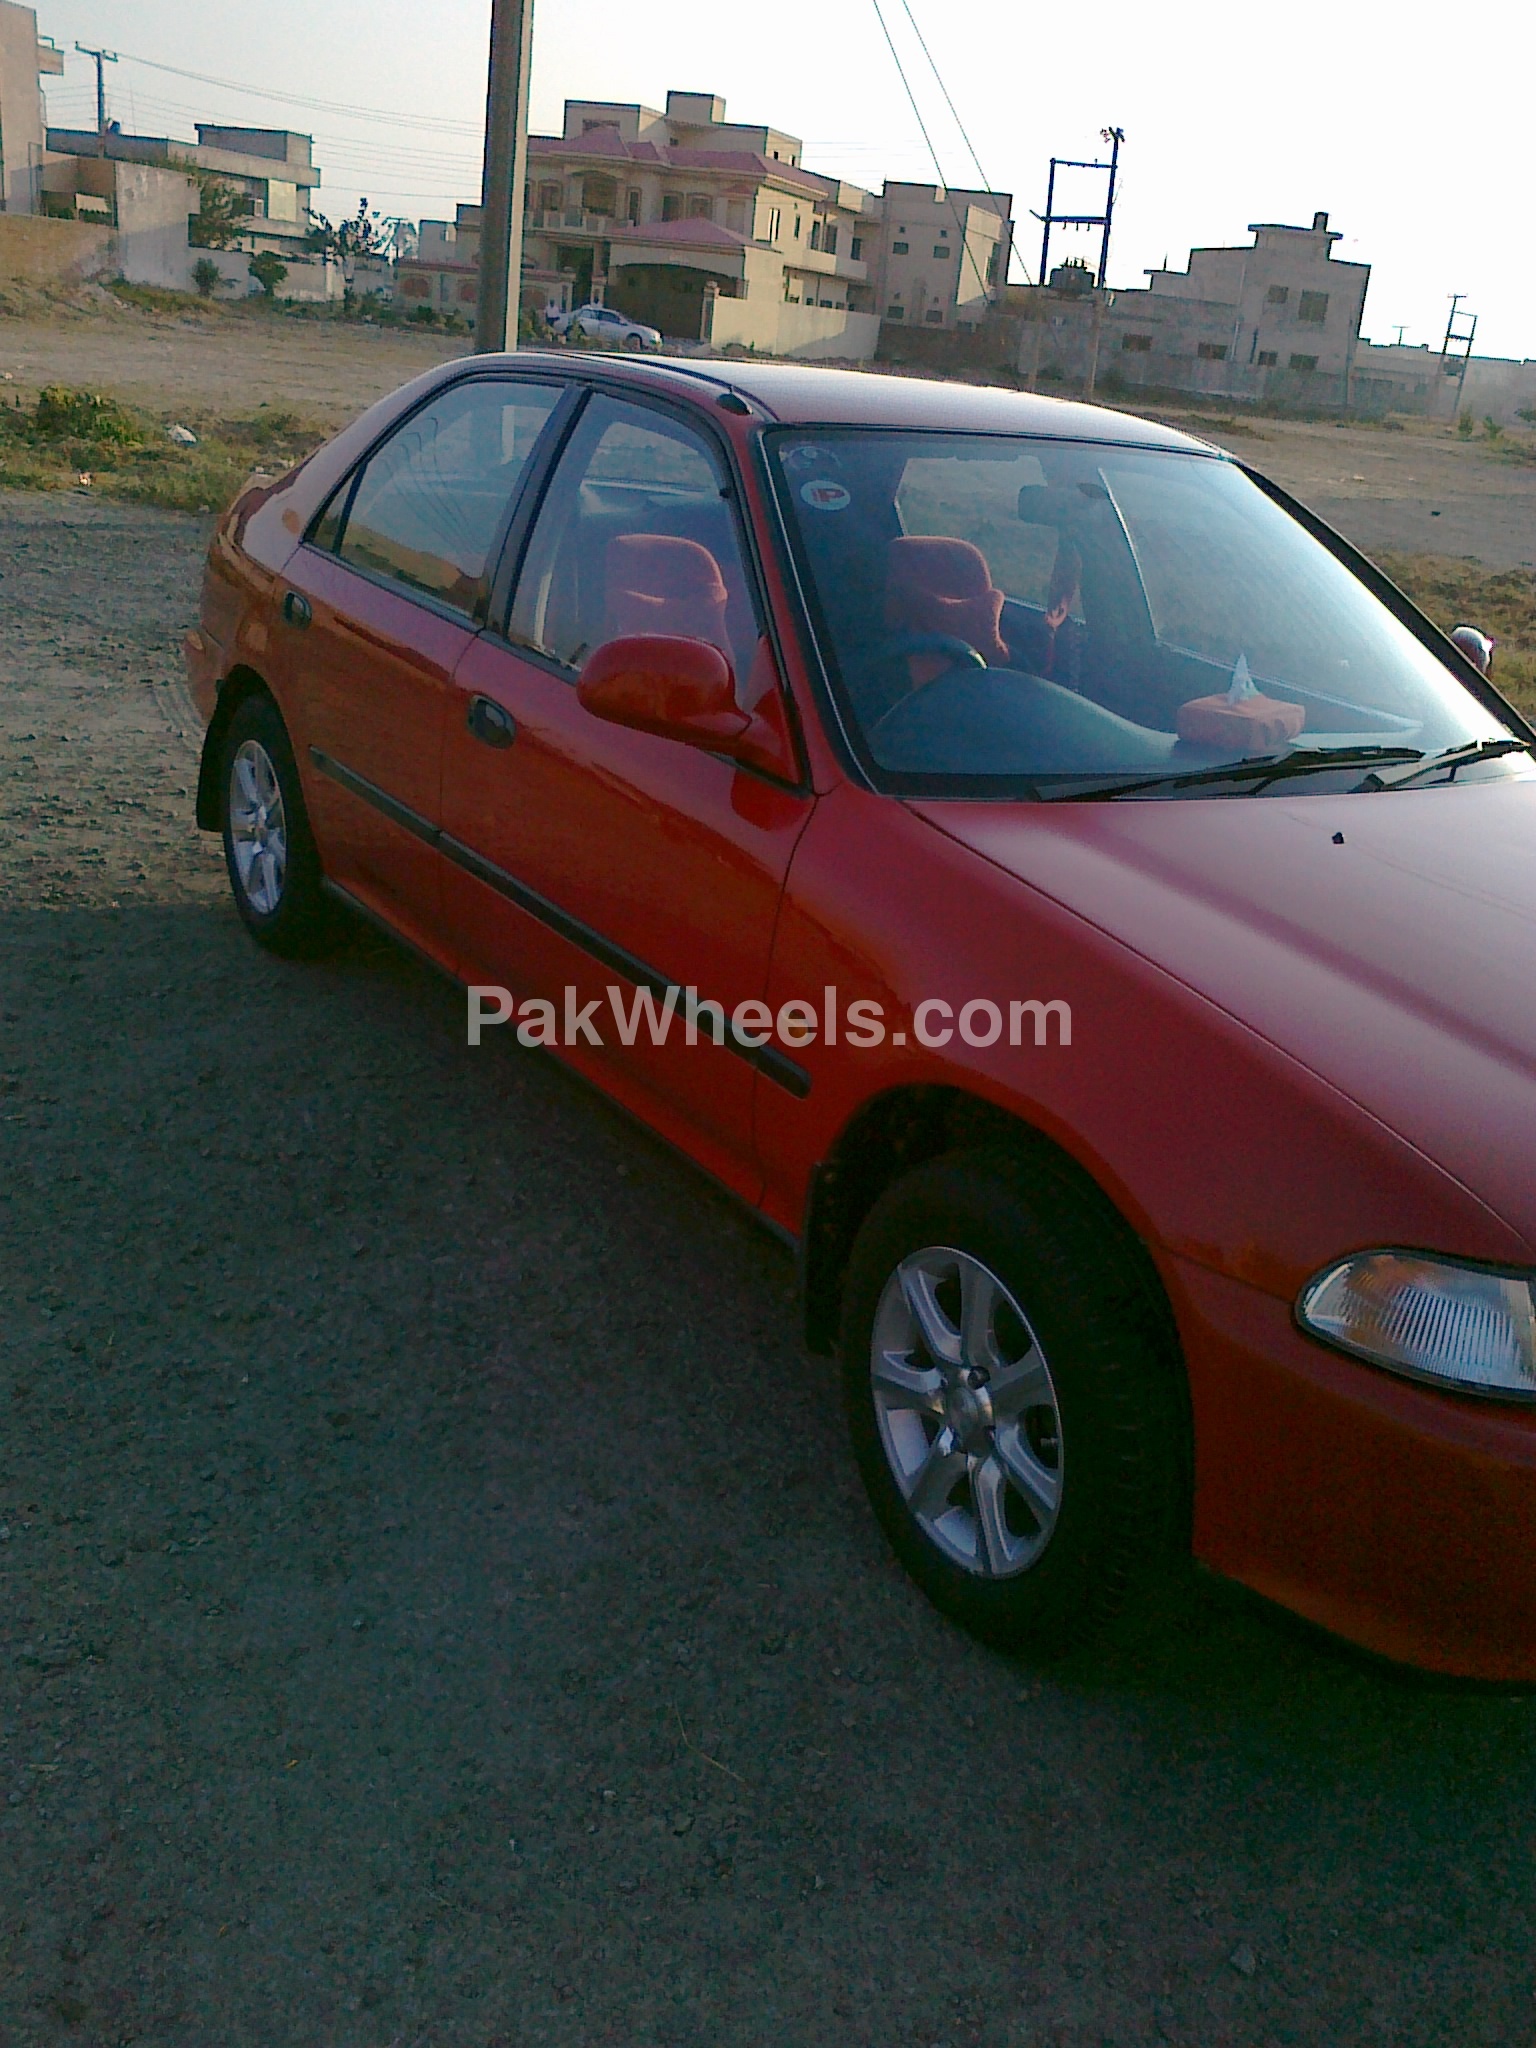 Pakwheels used cars search honda lahore #2